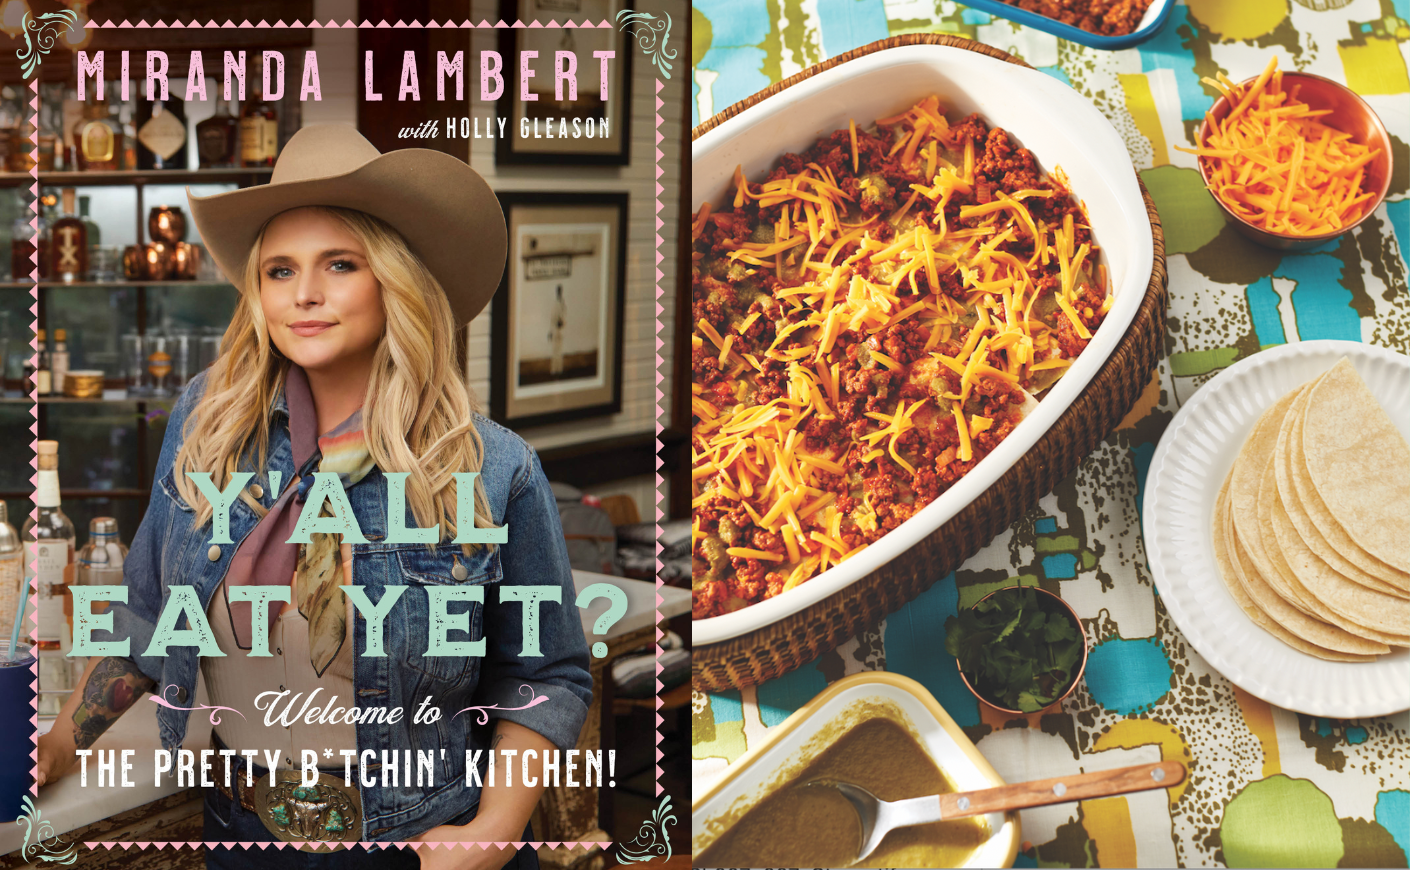 The cover of Miranda Lambert's cookbook "Y'all Eat Yet?"